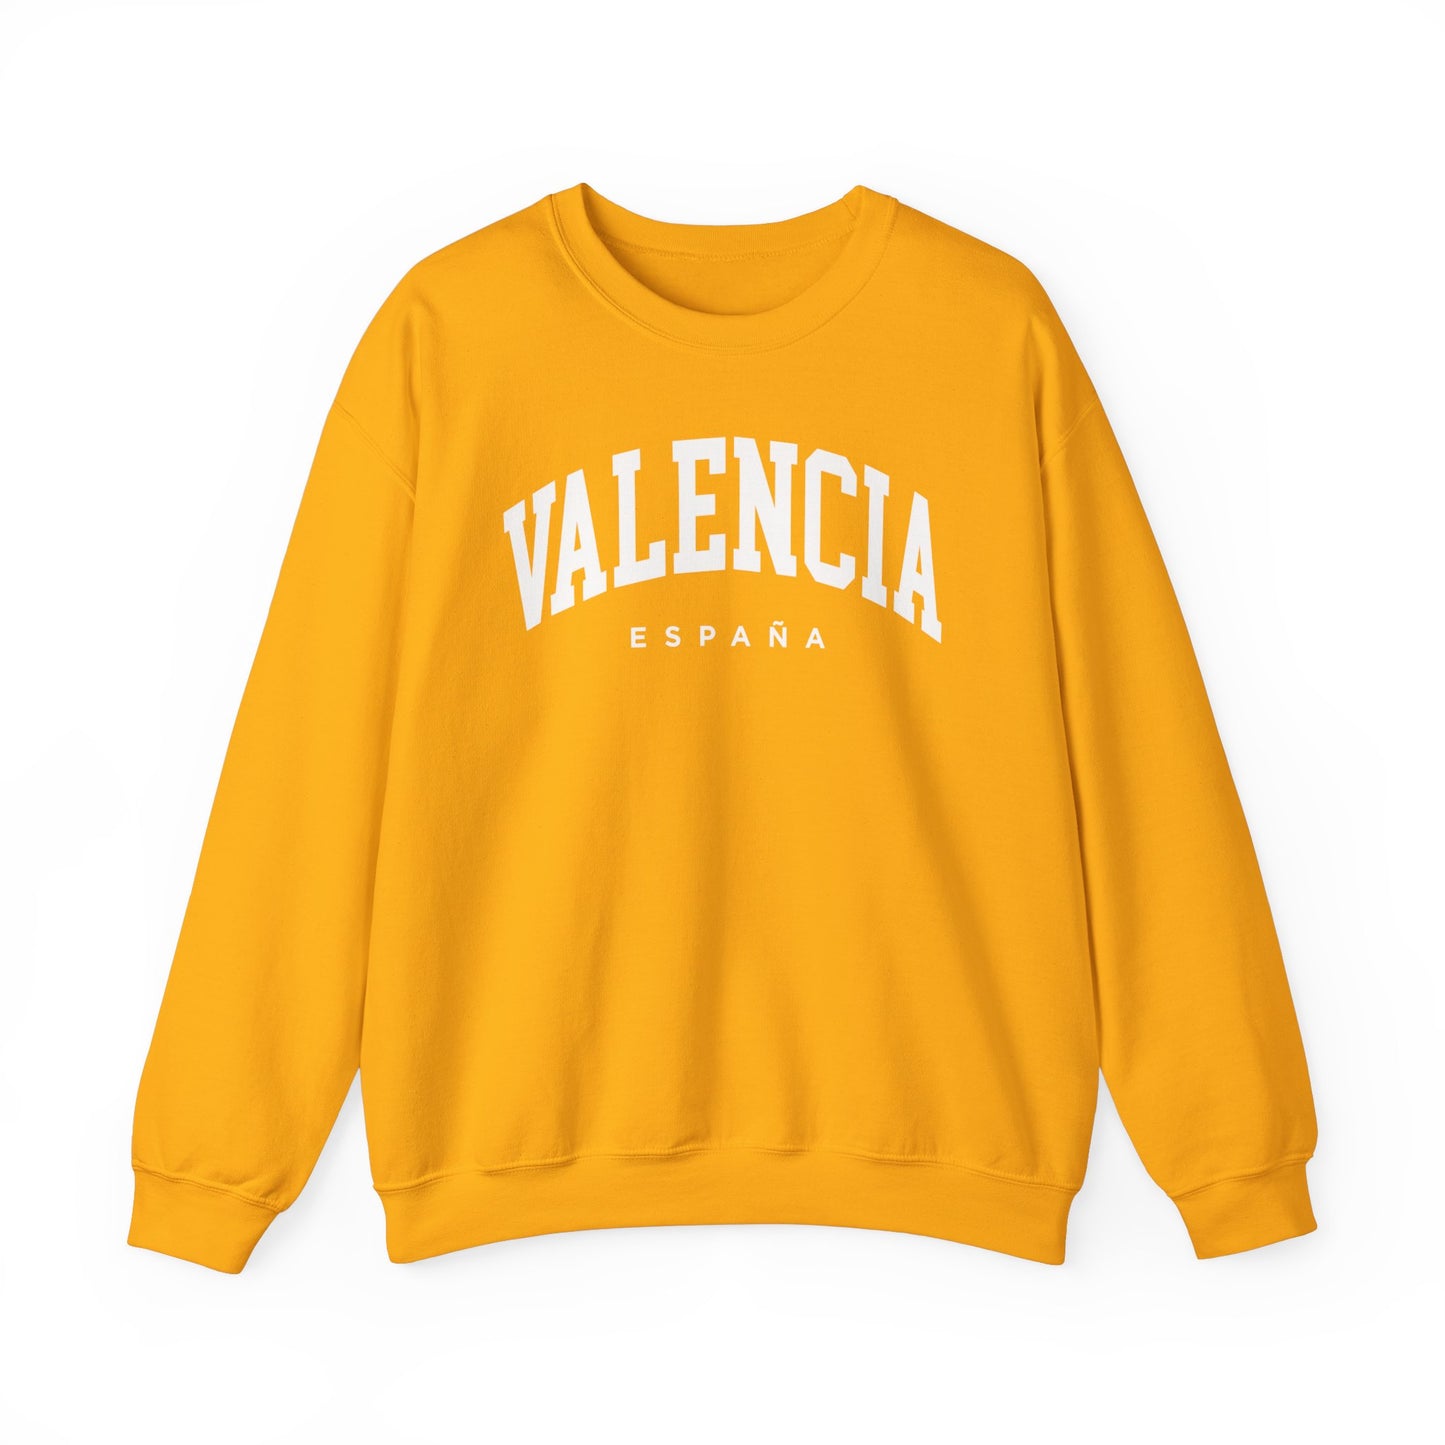 Valencia Spain Sweatshirt